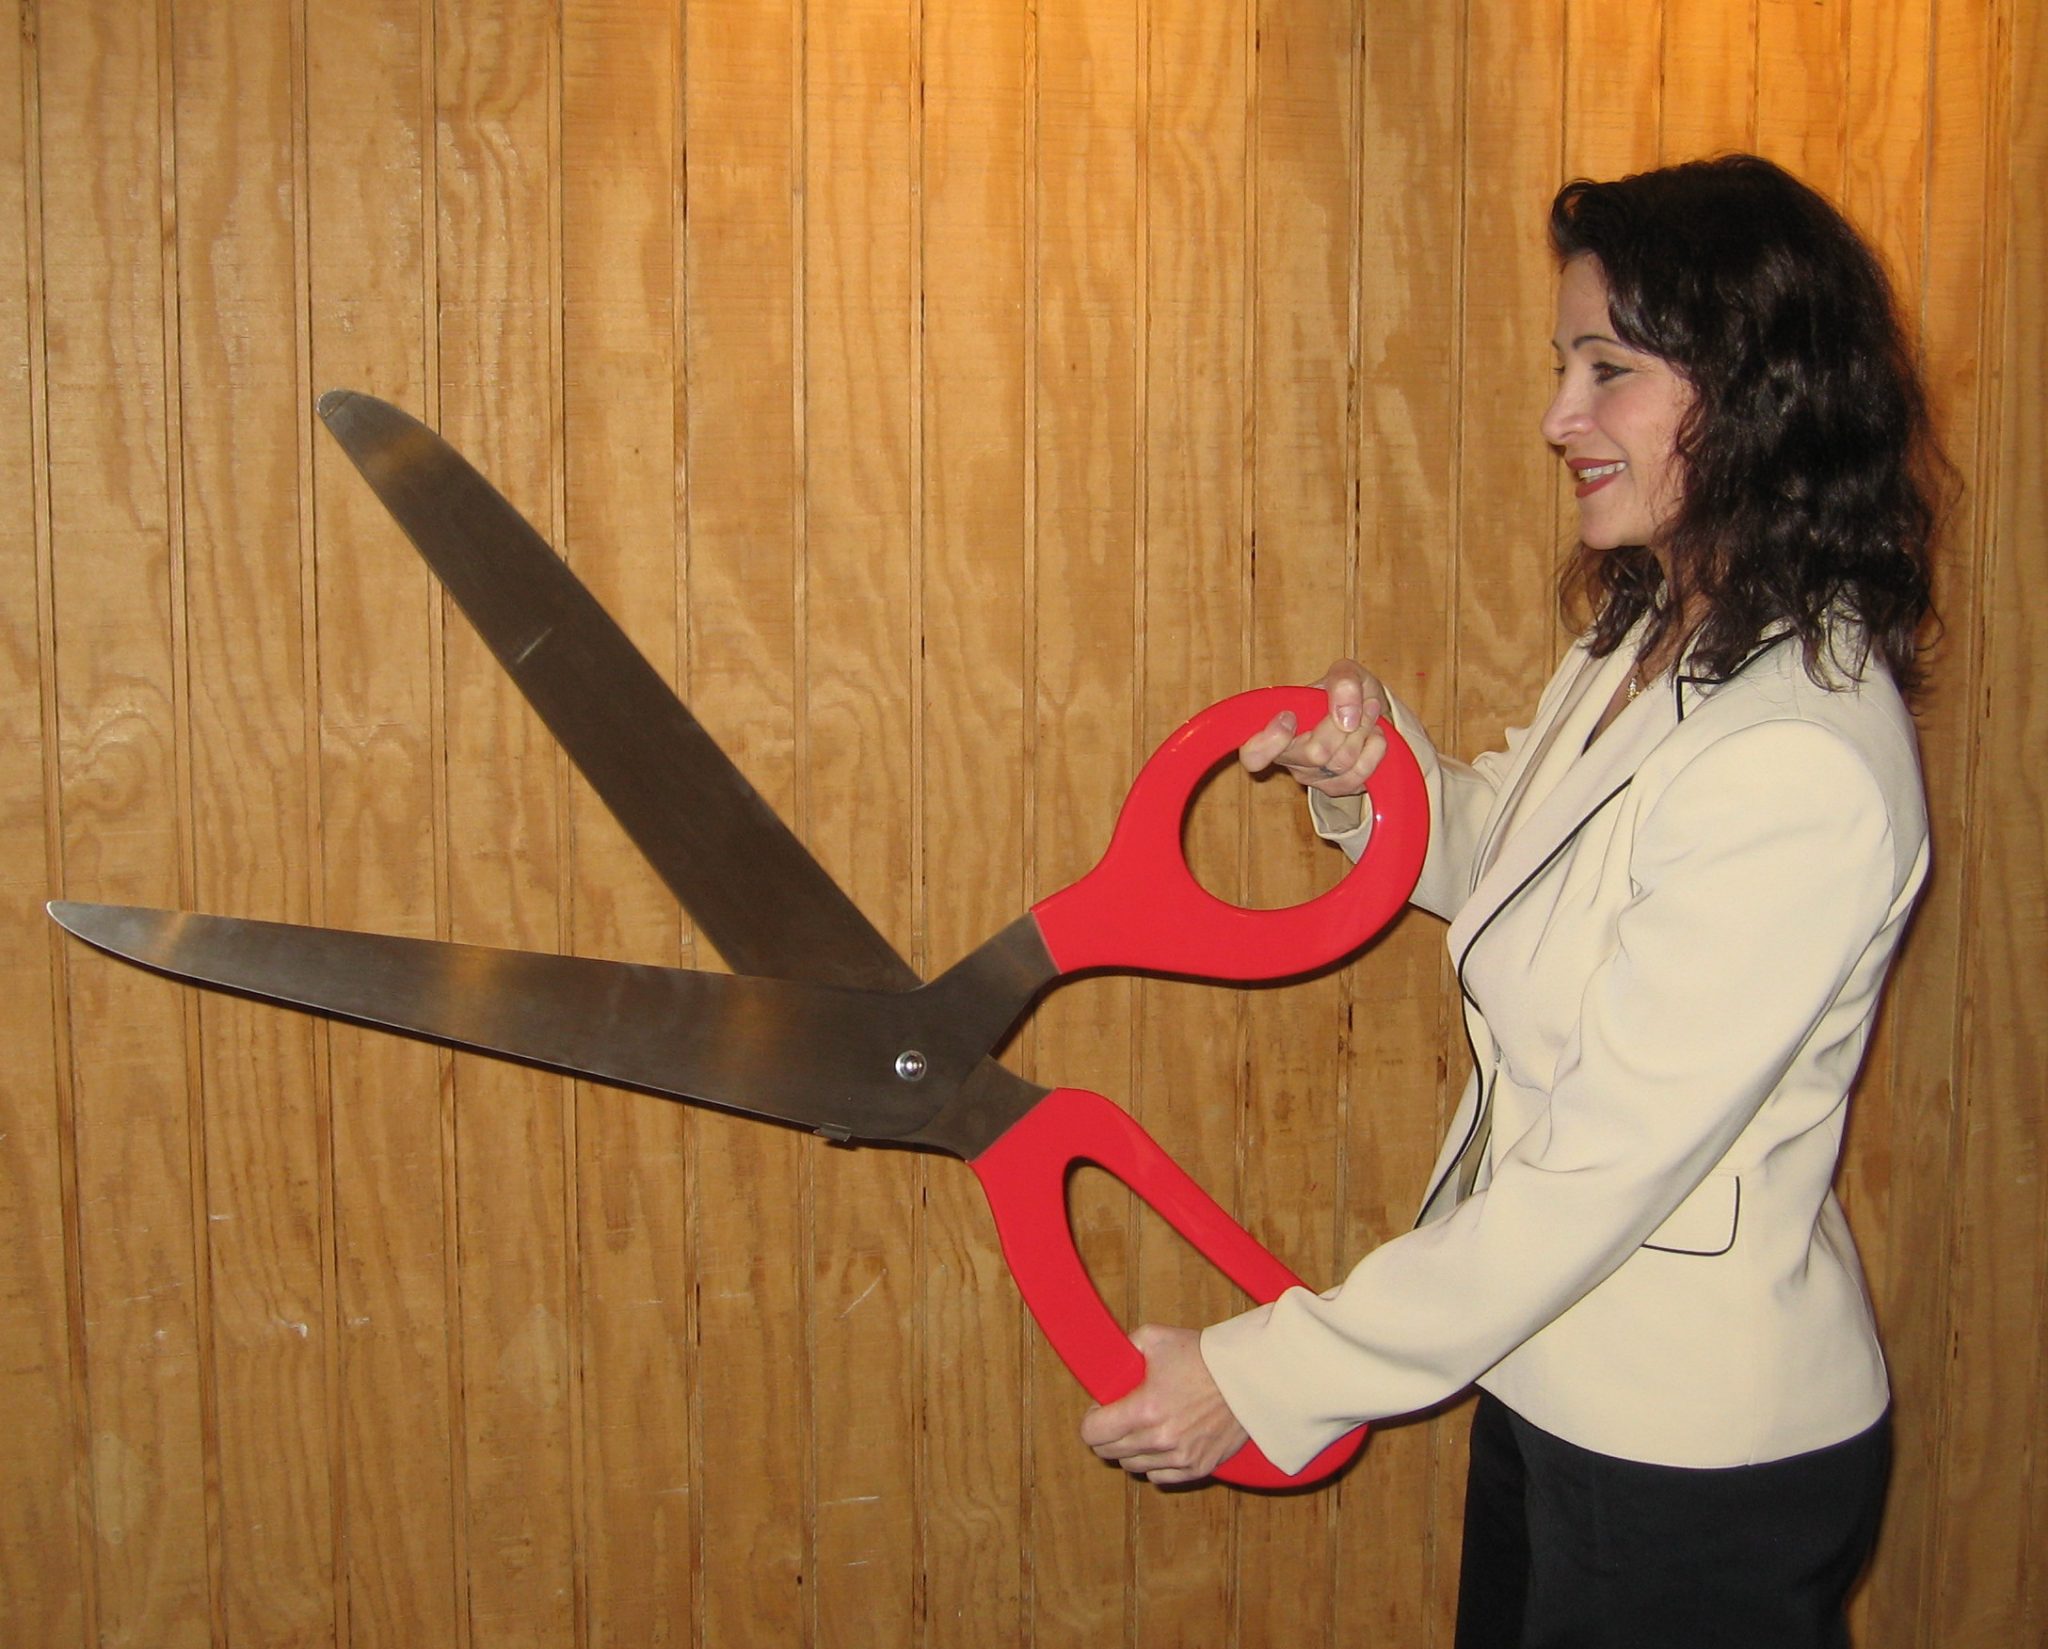 https://www.baltimoresbest.net/wp-content/uploads/2013/09/Scissors-Ceremonial-Ribbon-Cutting.jpg